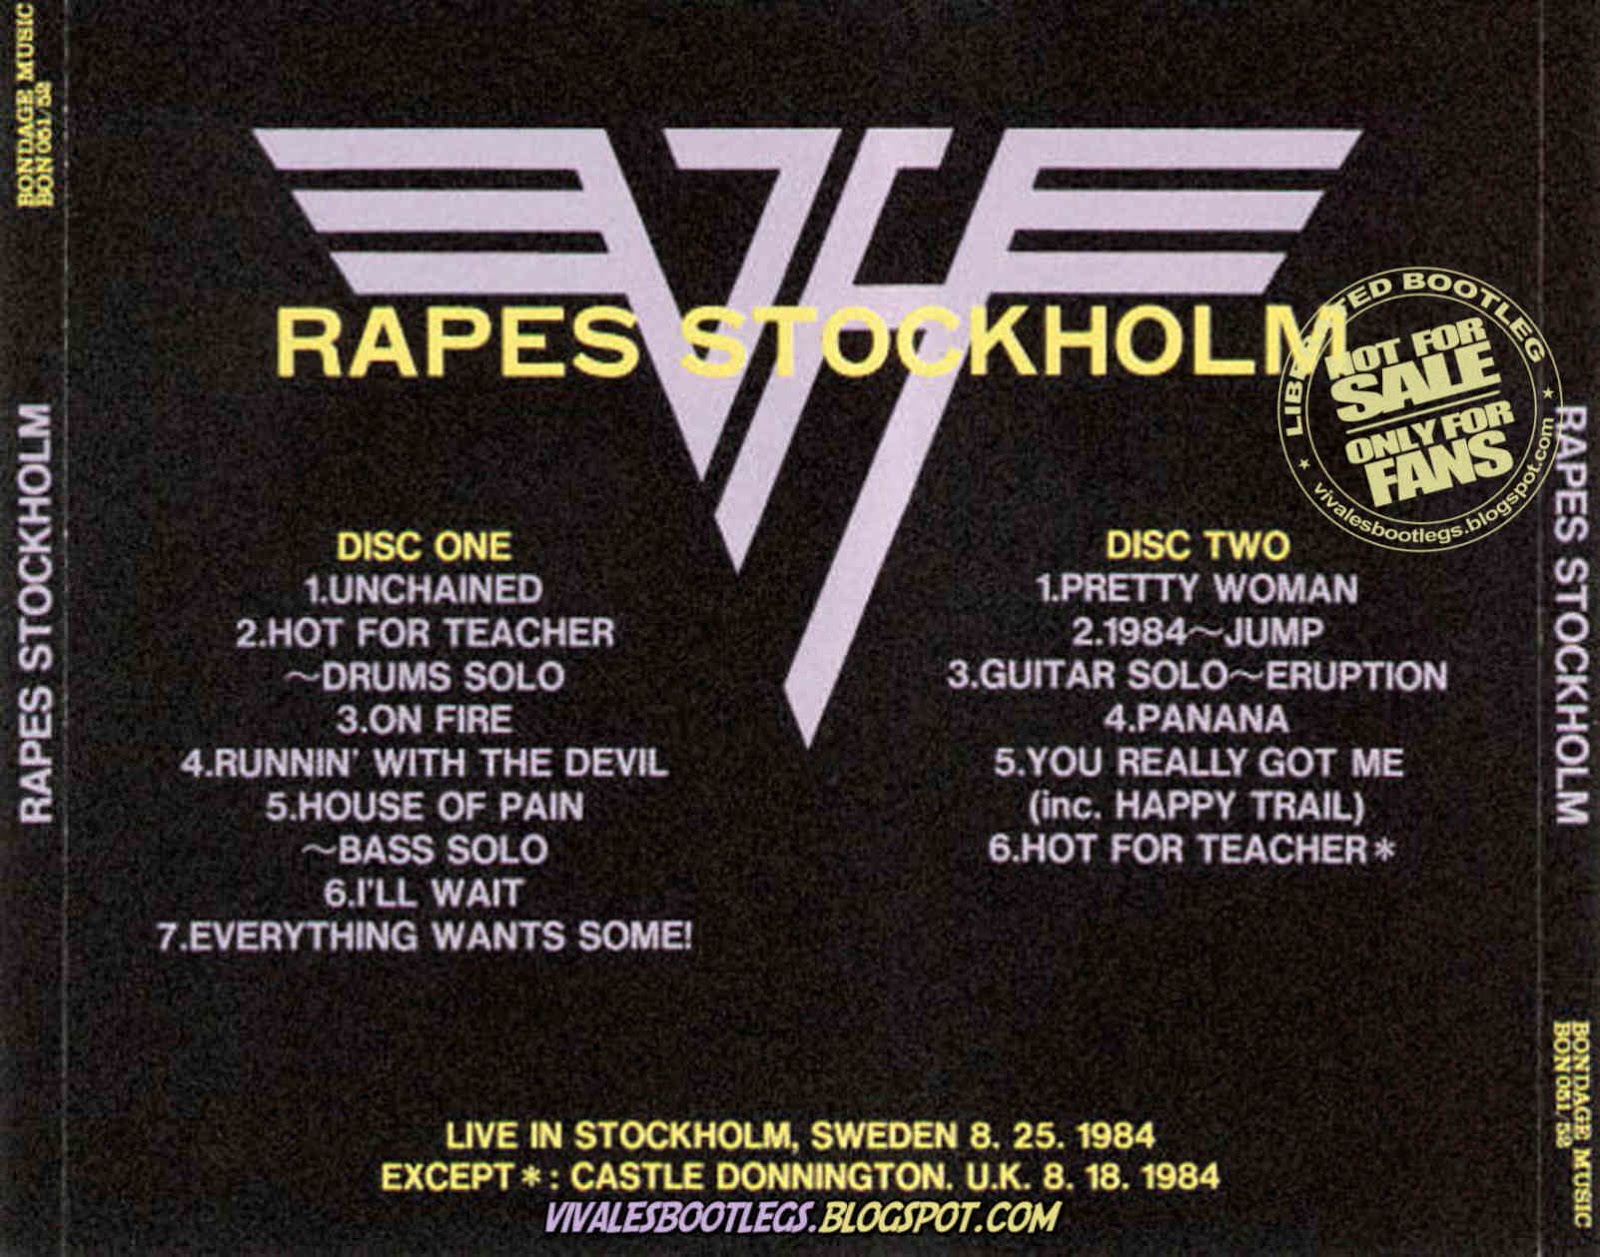 Van Halen: Rapes Stockholm. 